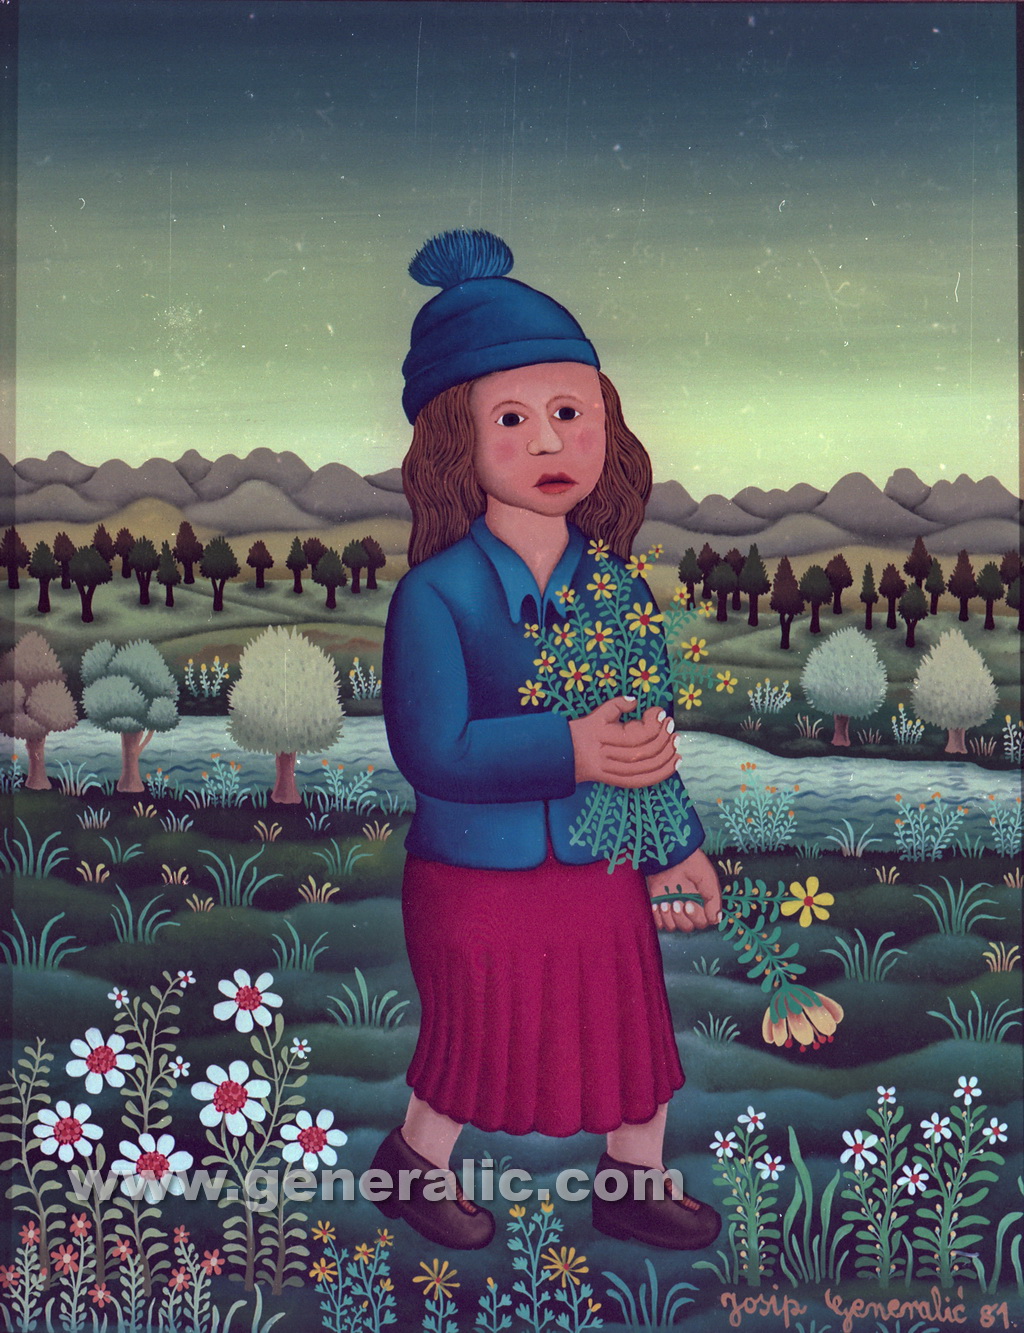 Josip Generalic, 1981, Girl with flowers, oil on glass